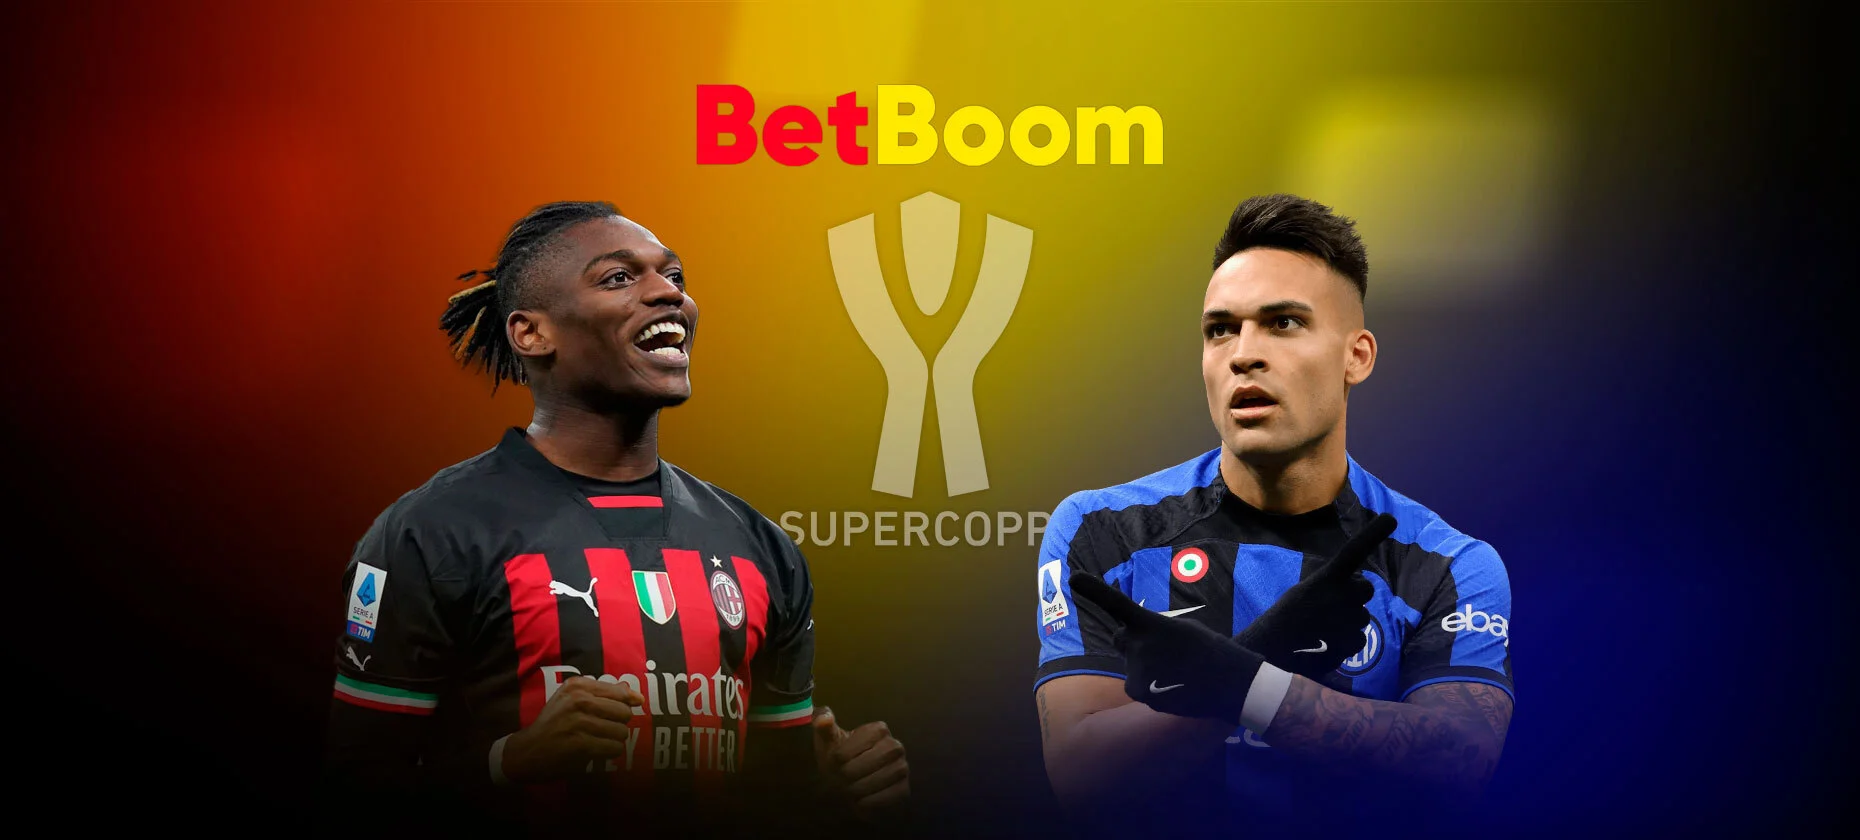 BetBoom бесплатно покажет Суперкубок Италии